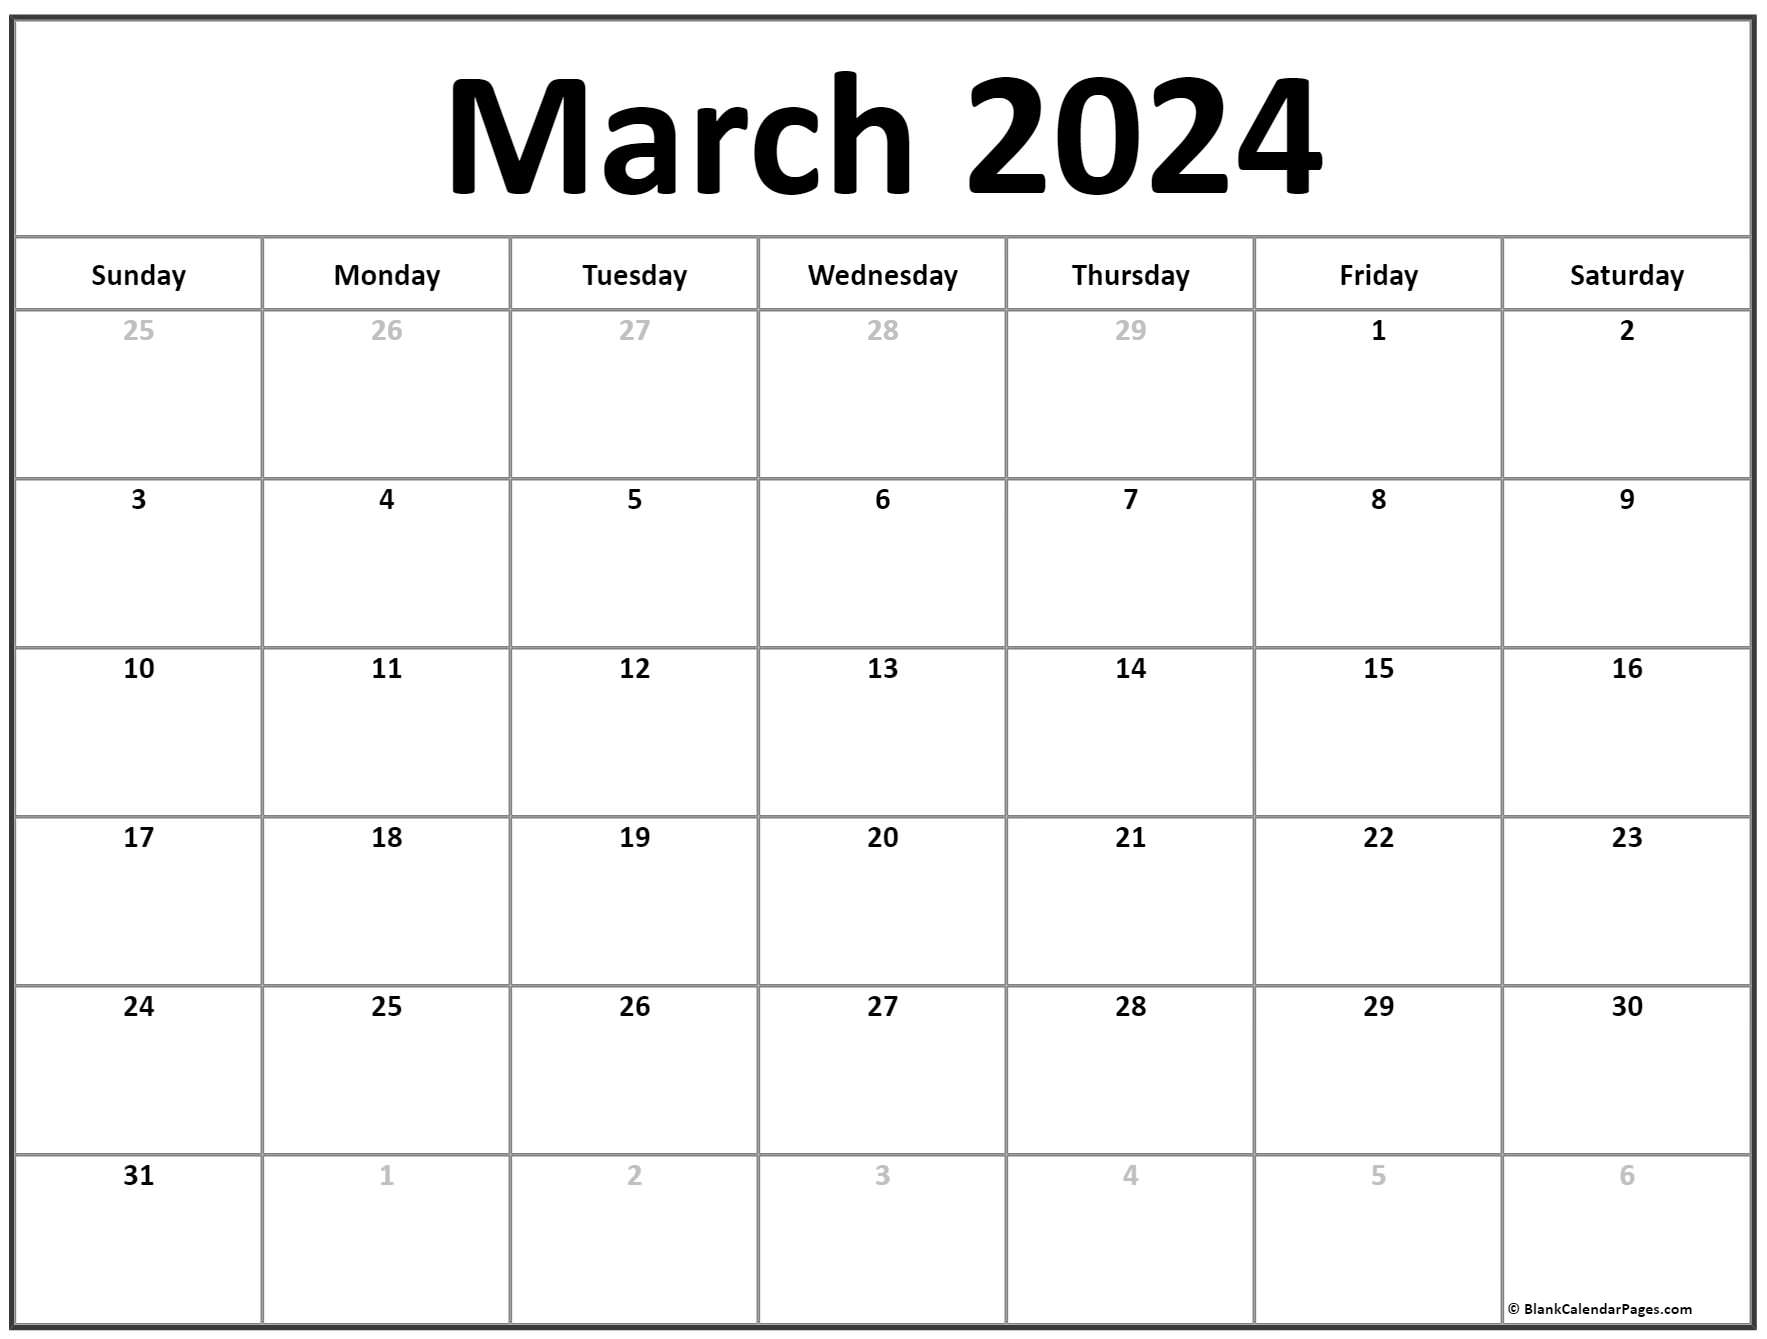 Календарь март 2016